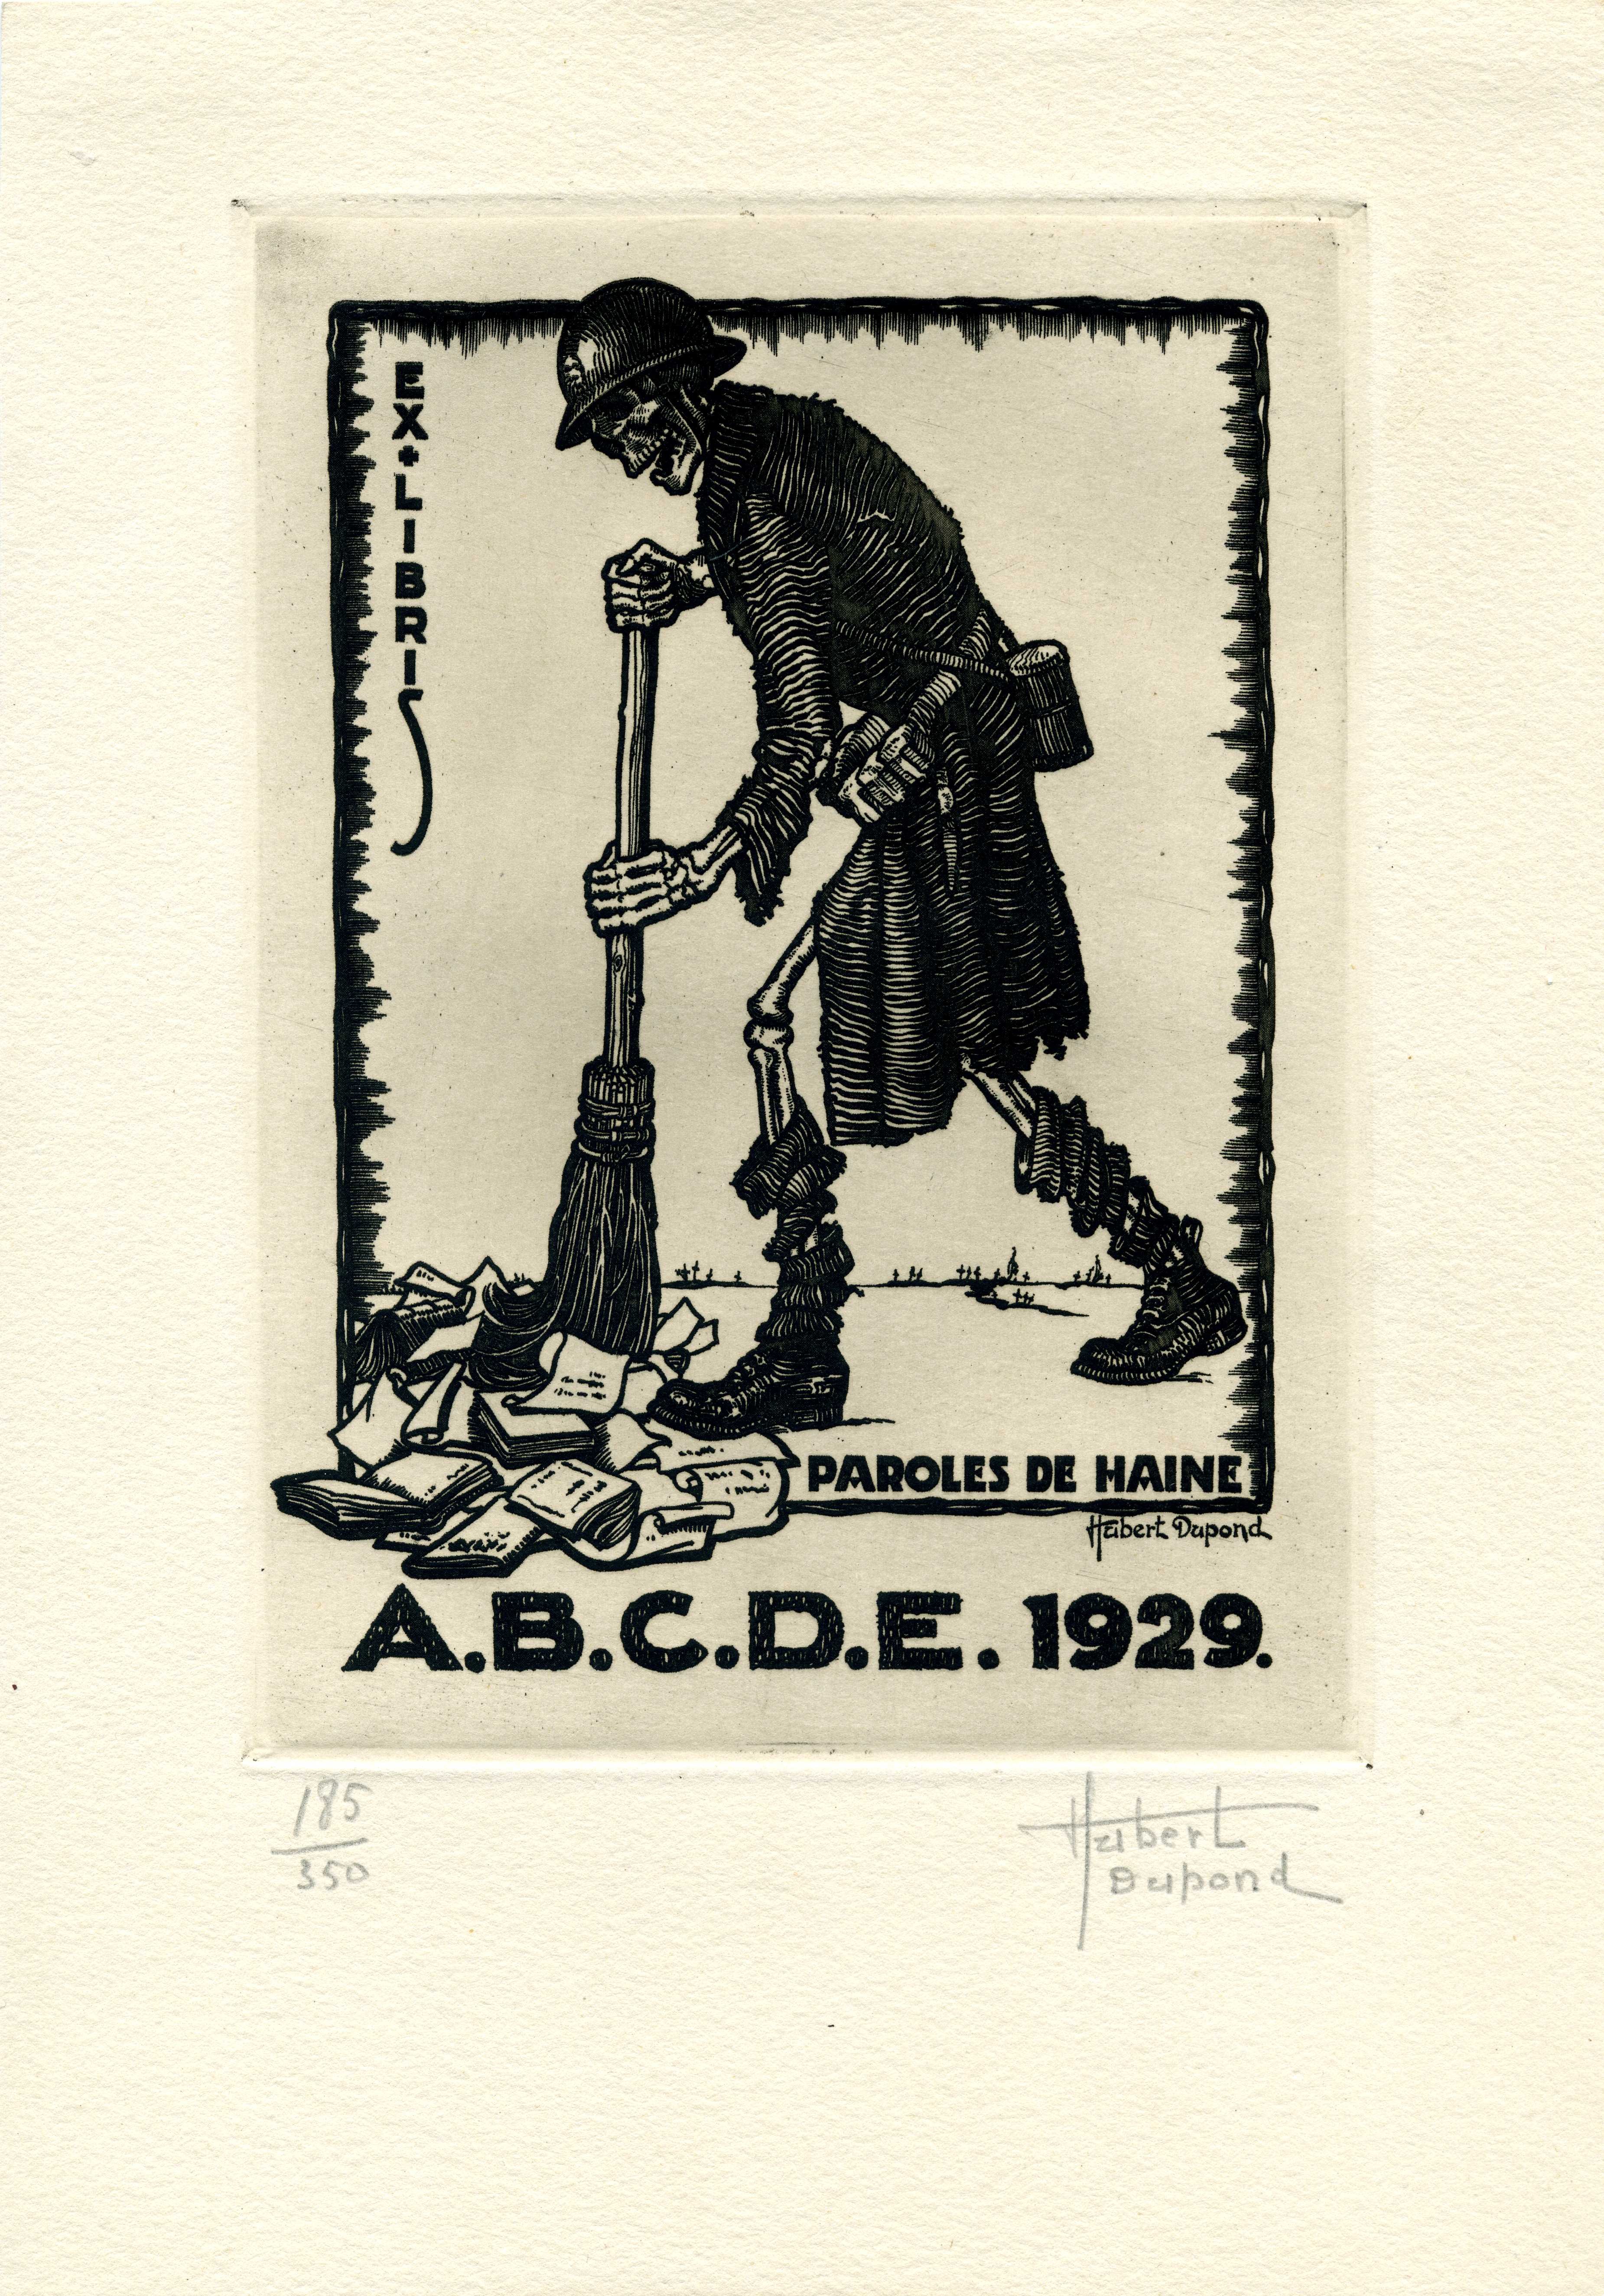 Exlibris "A.B.C.D.E. 1929" (Museum für Sepulkralkultur CC BY-NC-SA)